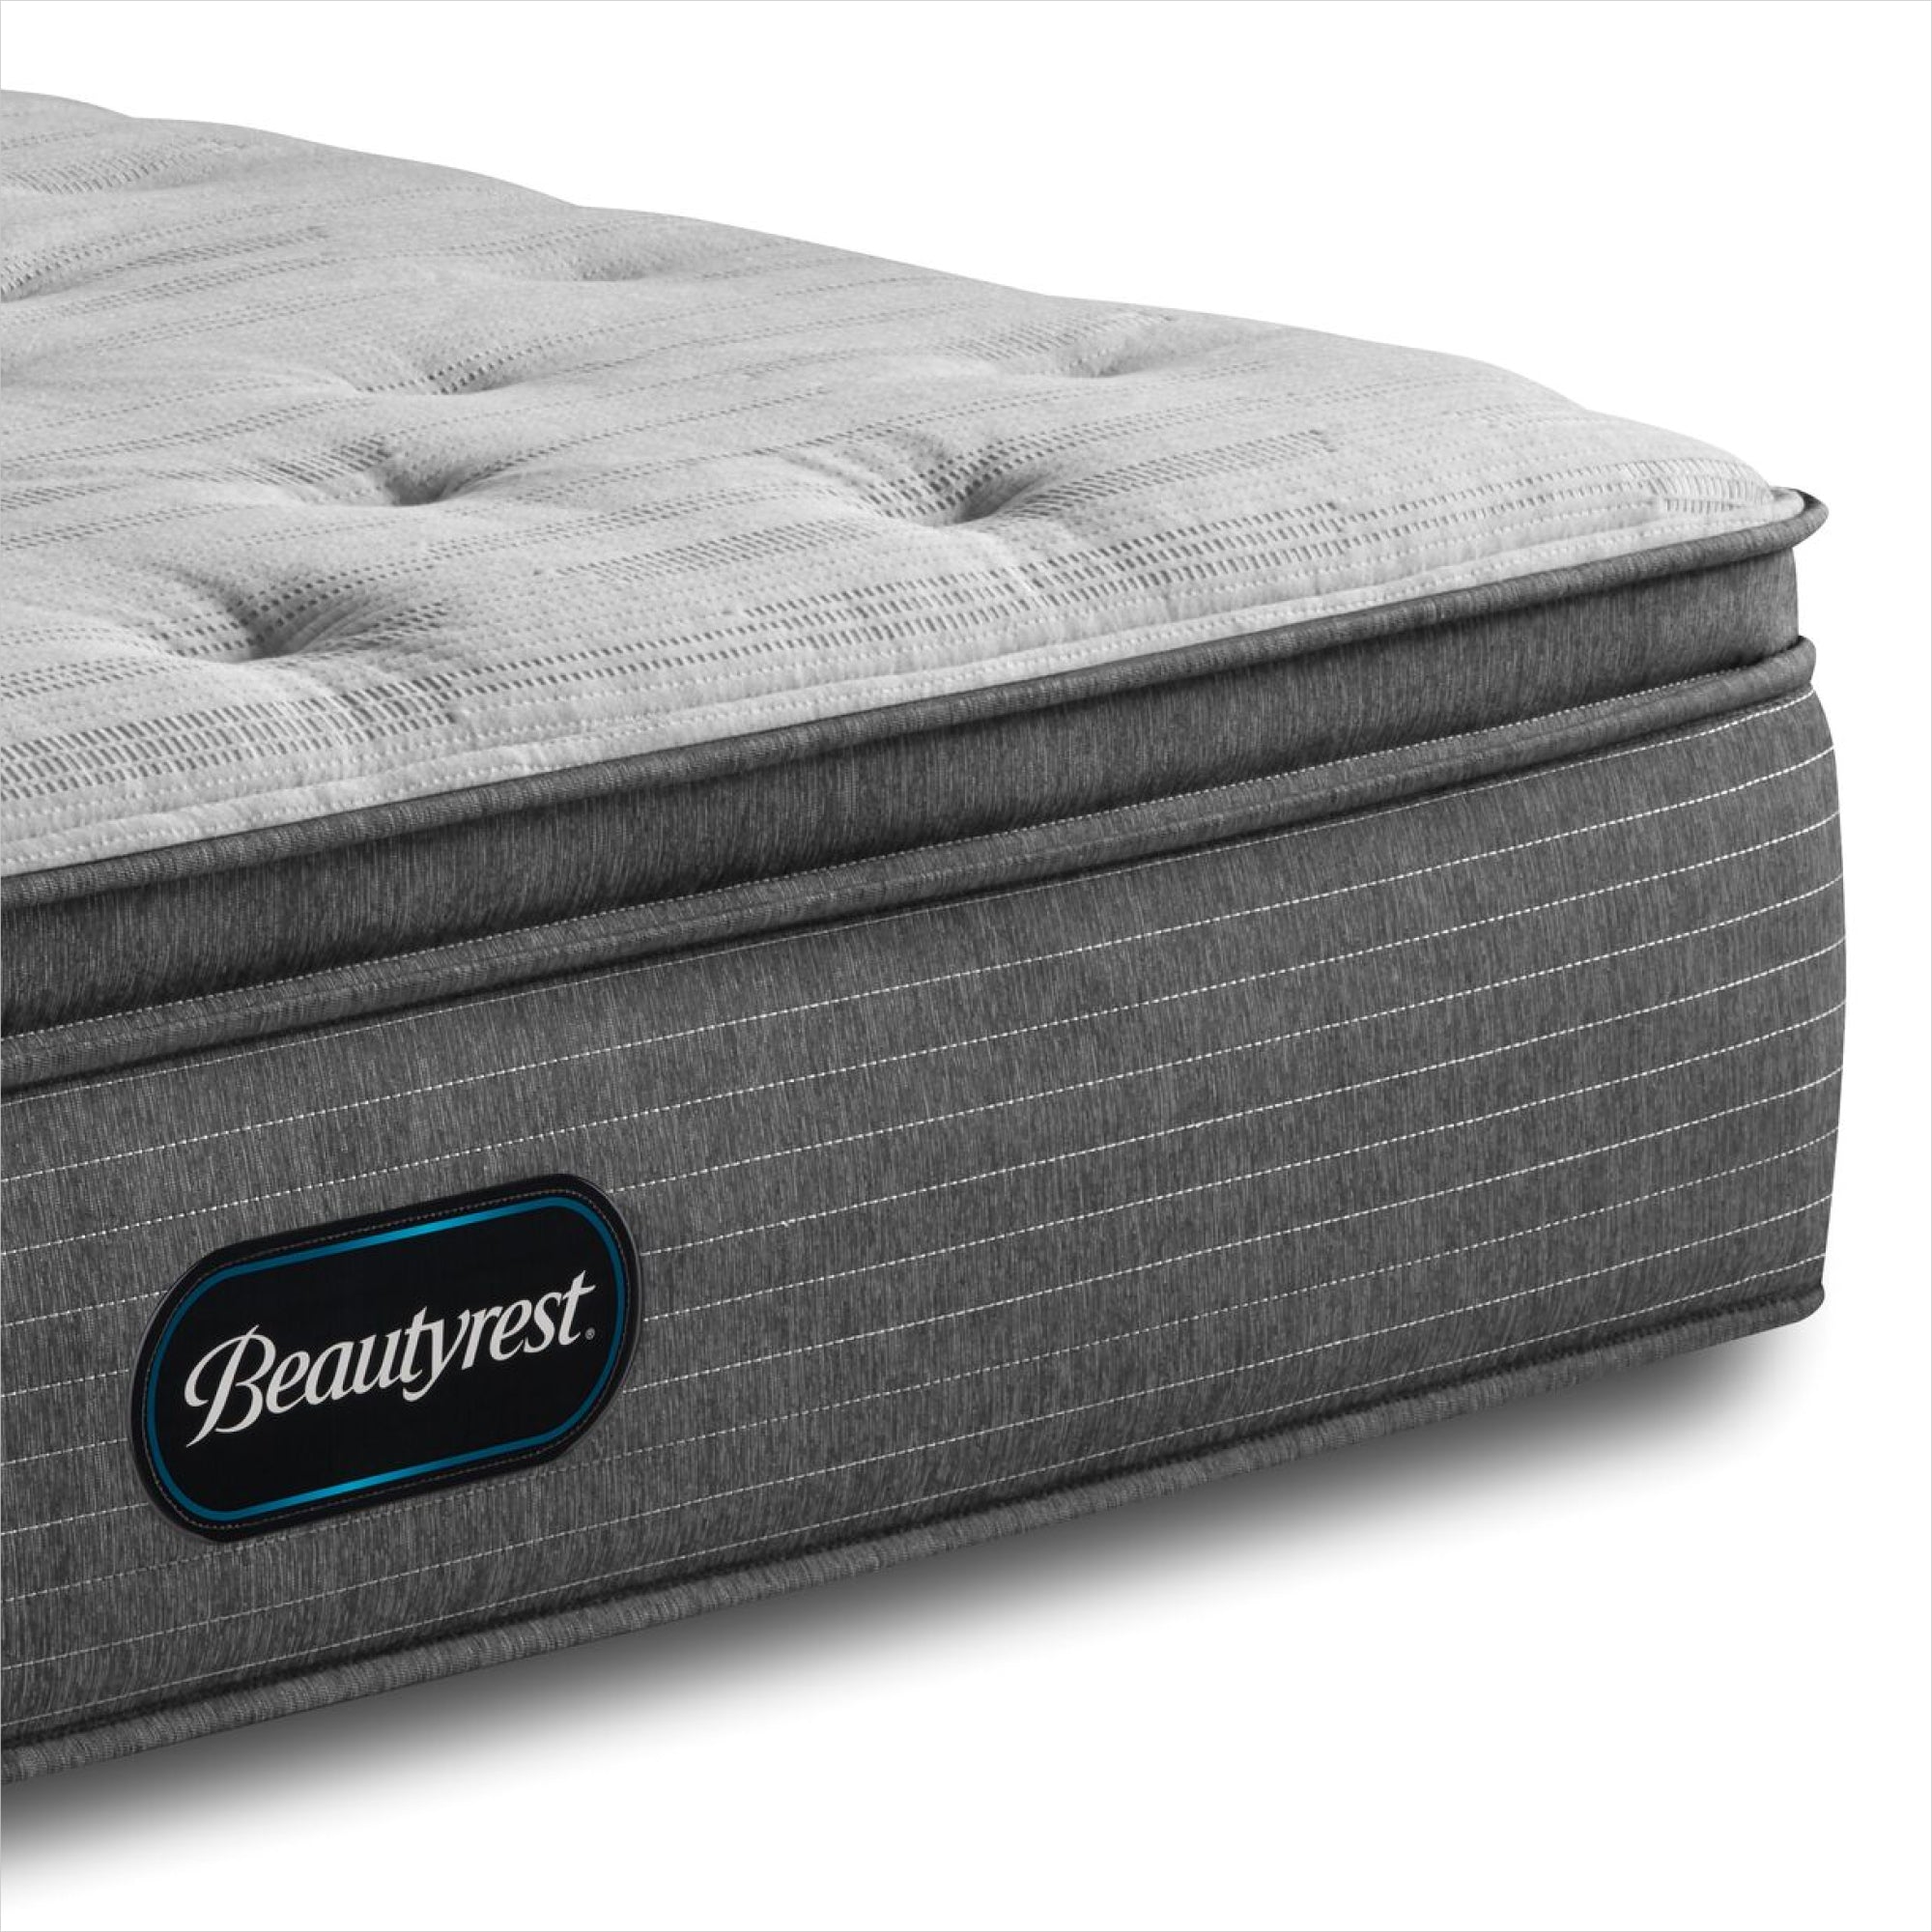 Corner view of the Beautyrest Select mattress ||feel: Plush Pillow Top